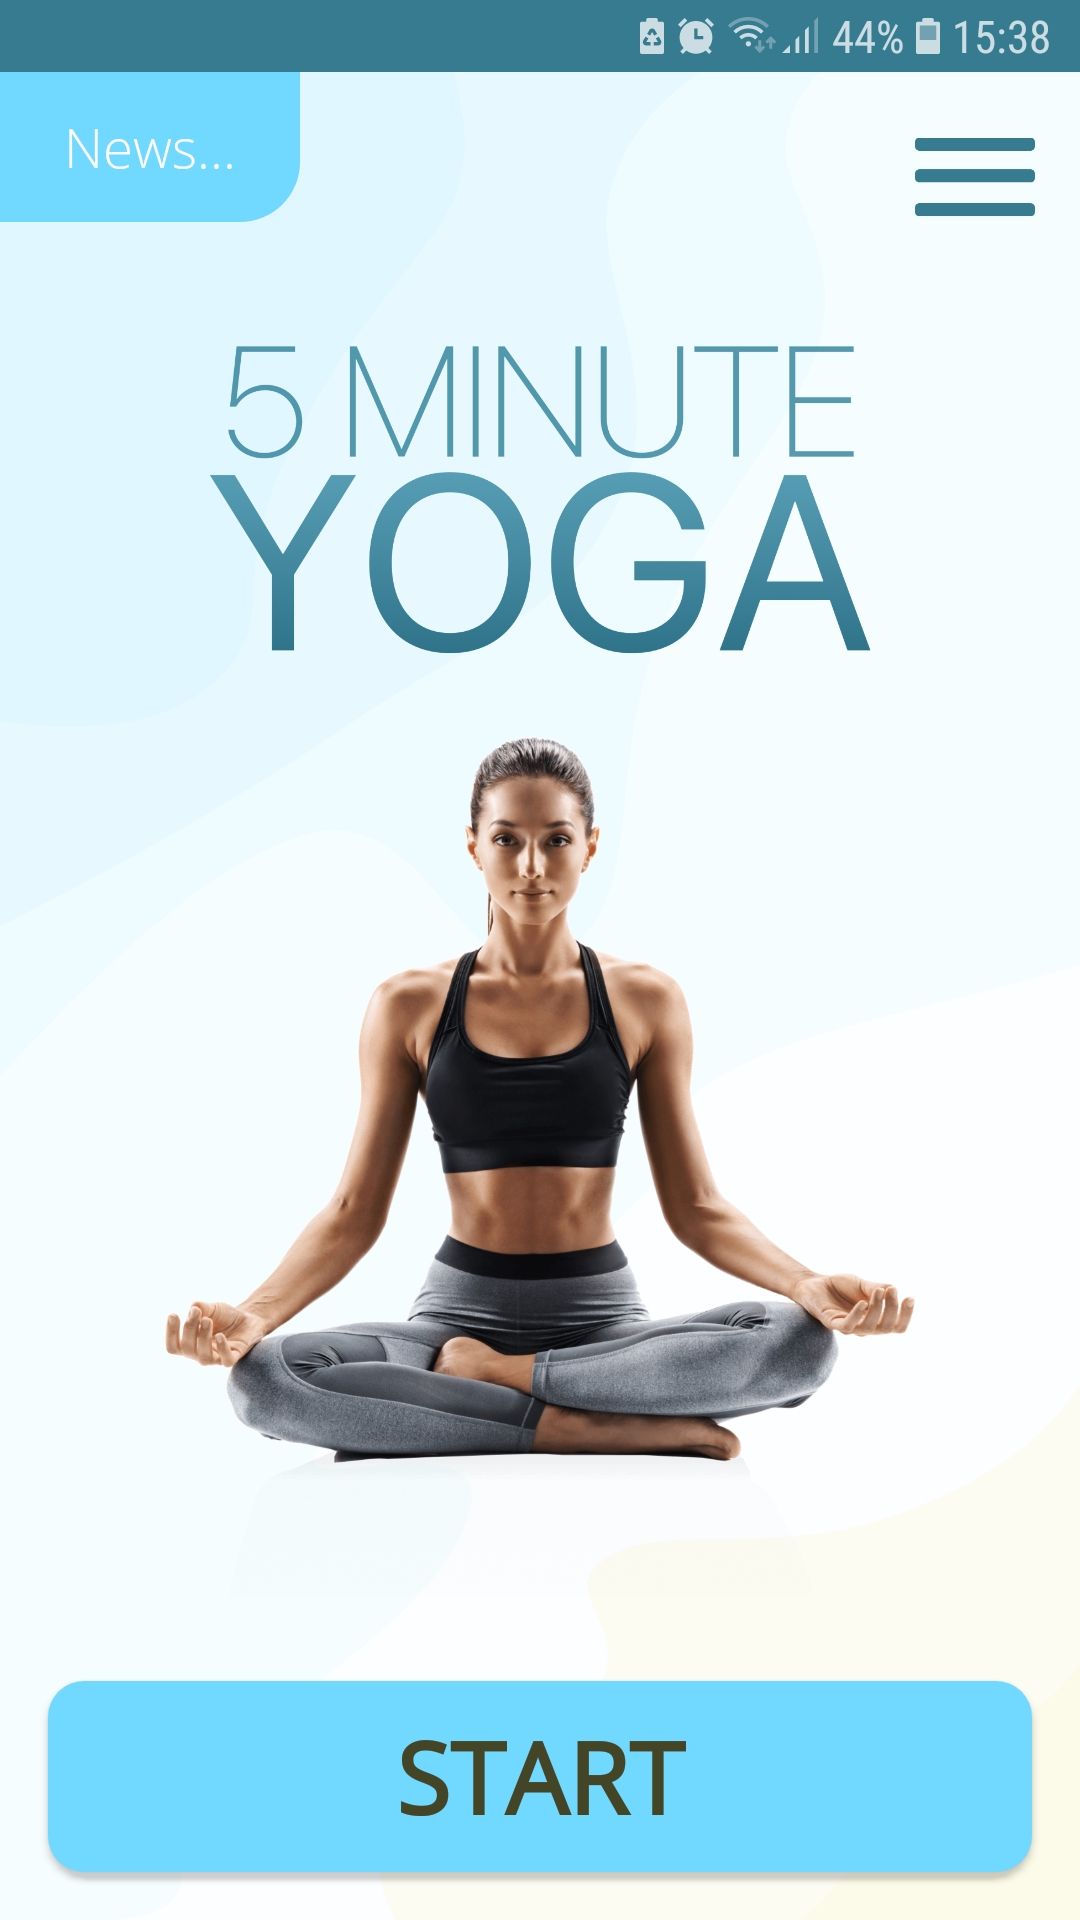 5 Minute Yoga mobile yoga fitness app